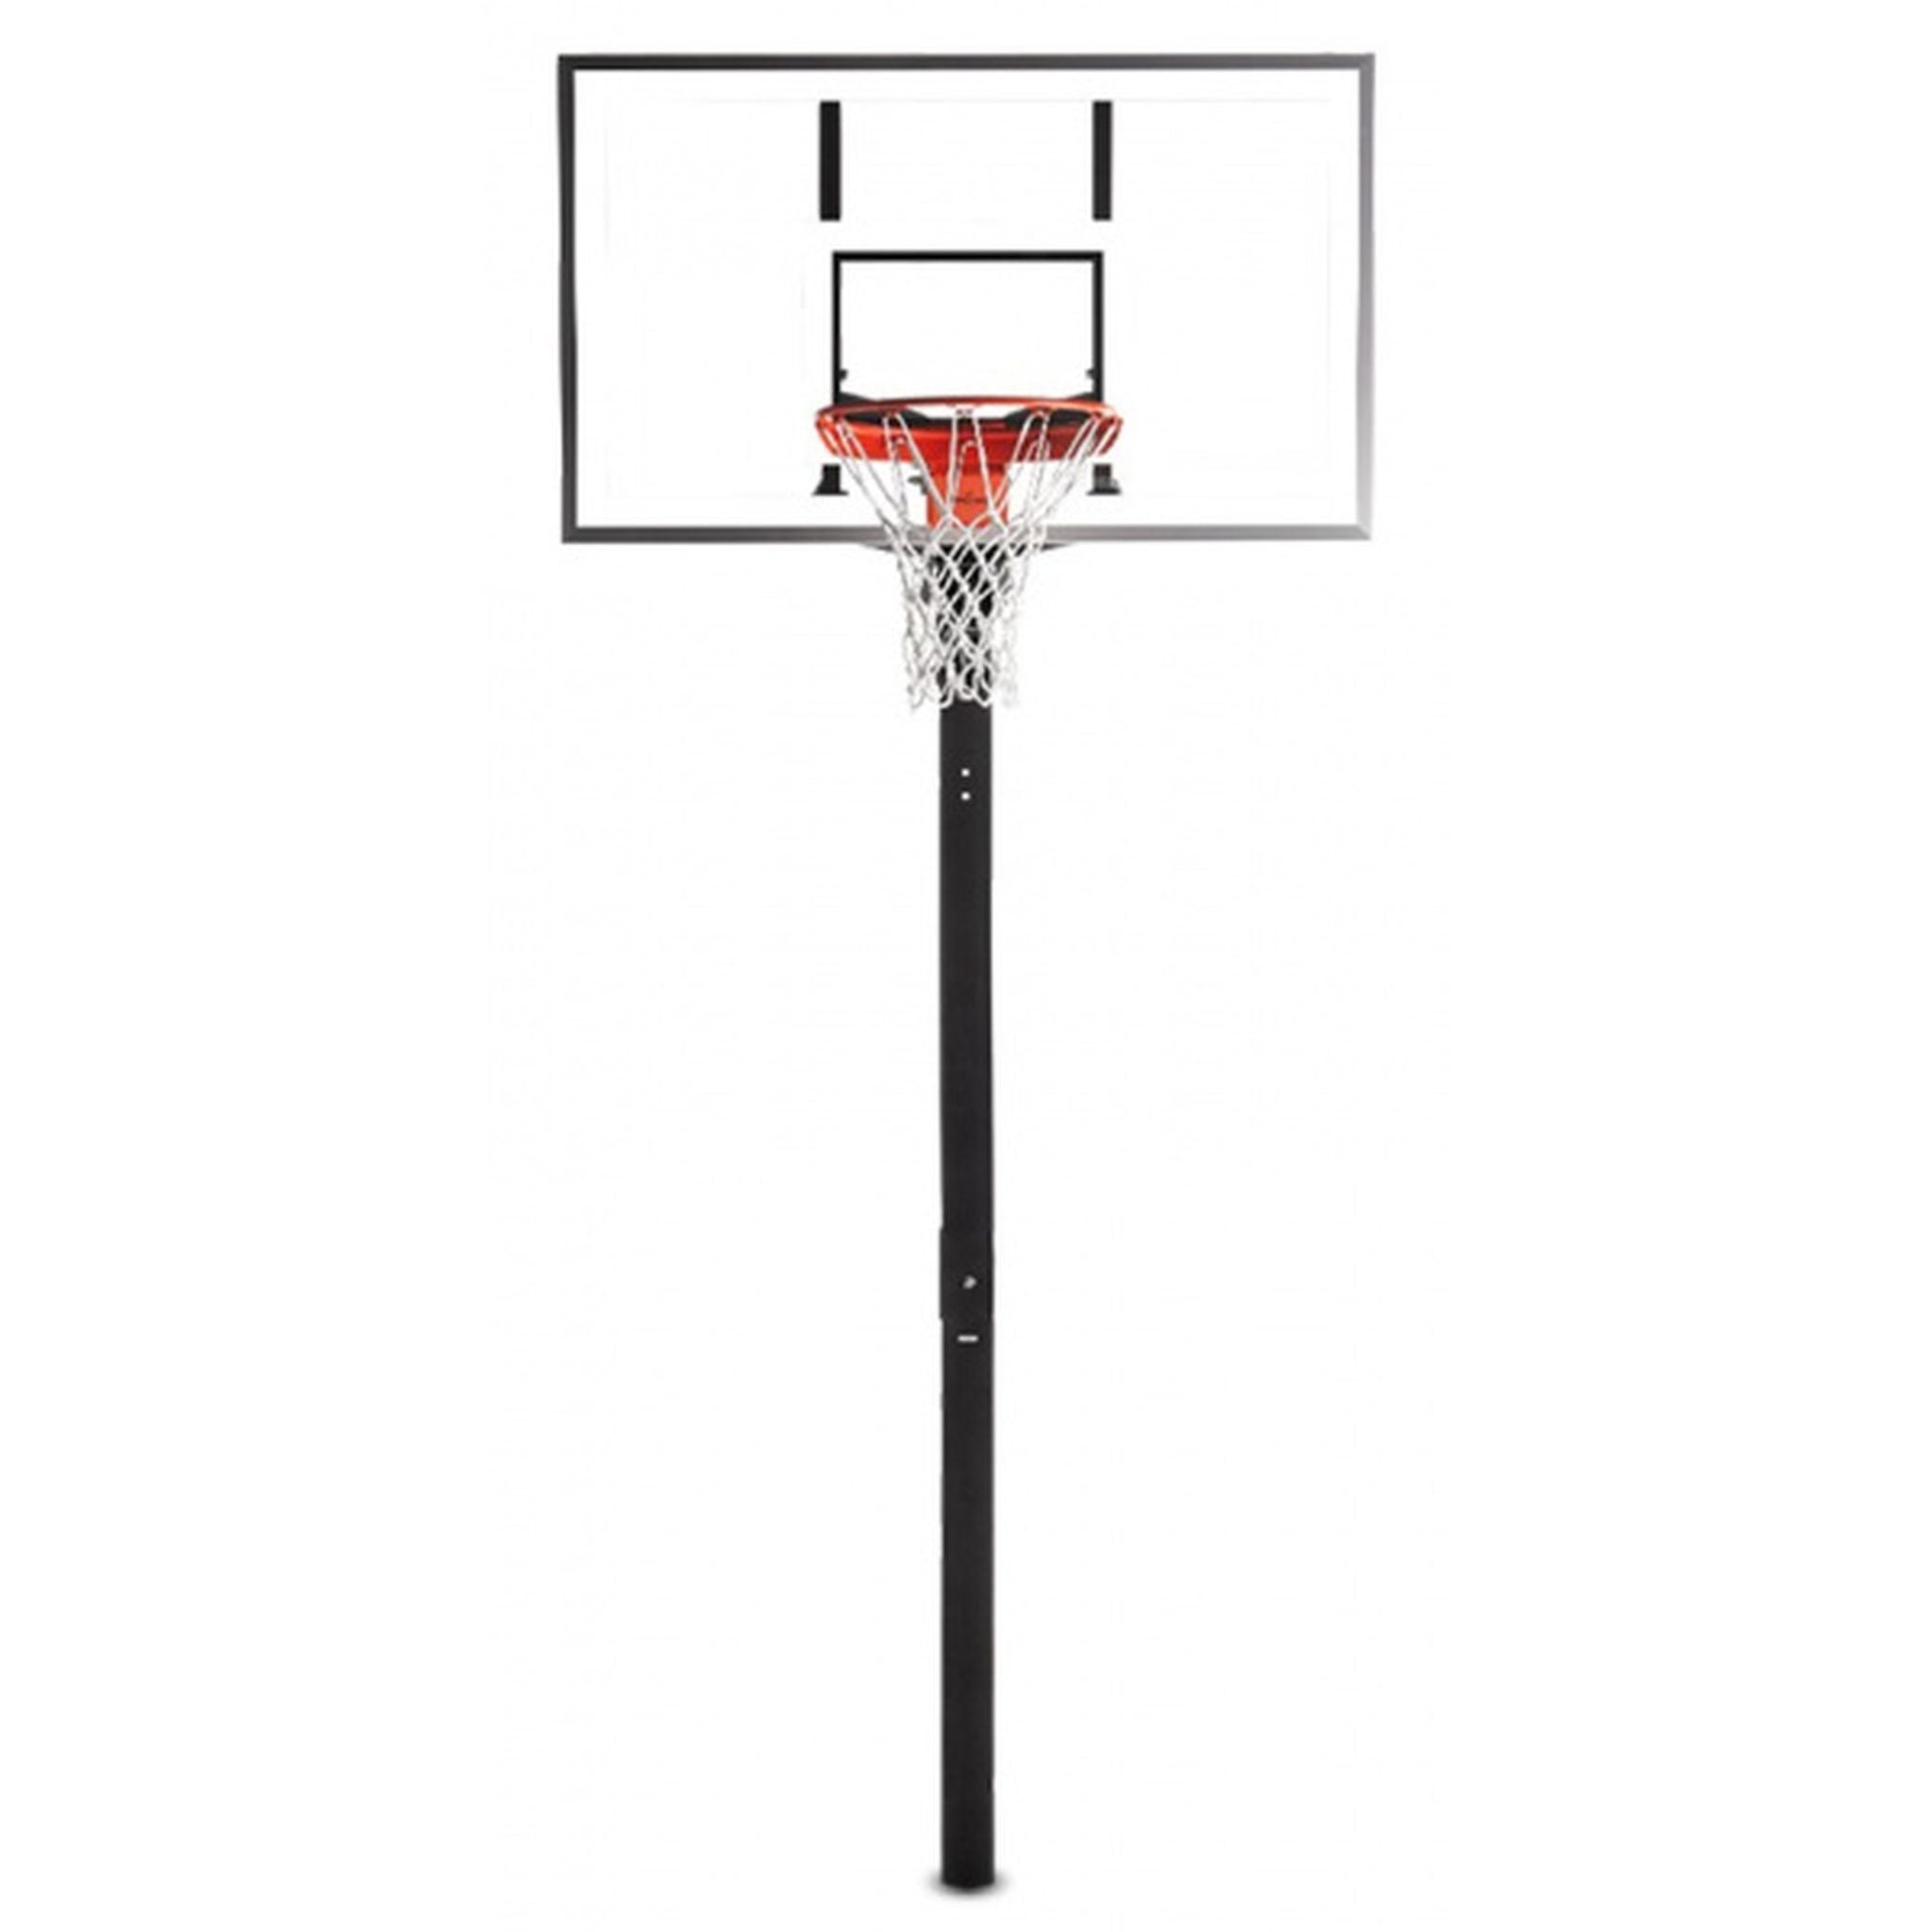 Spalding 54-inch U-Turn Acrylic Inground Basketball System